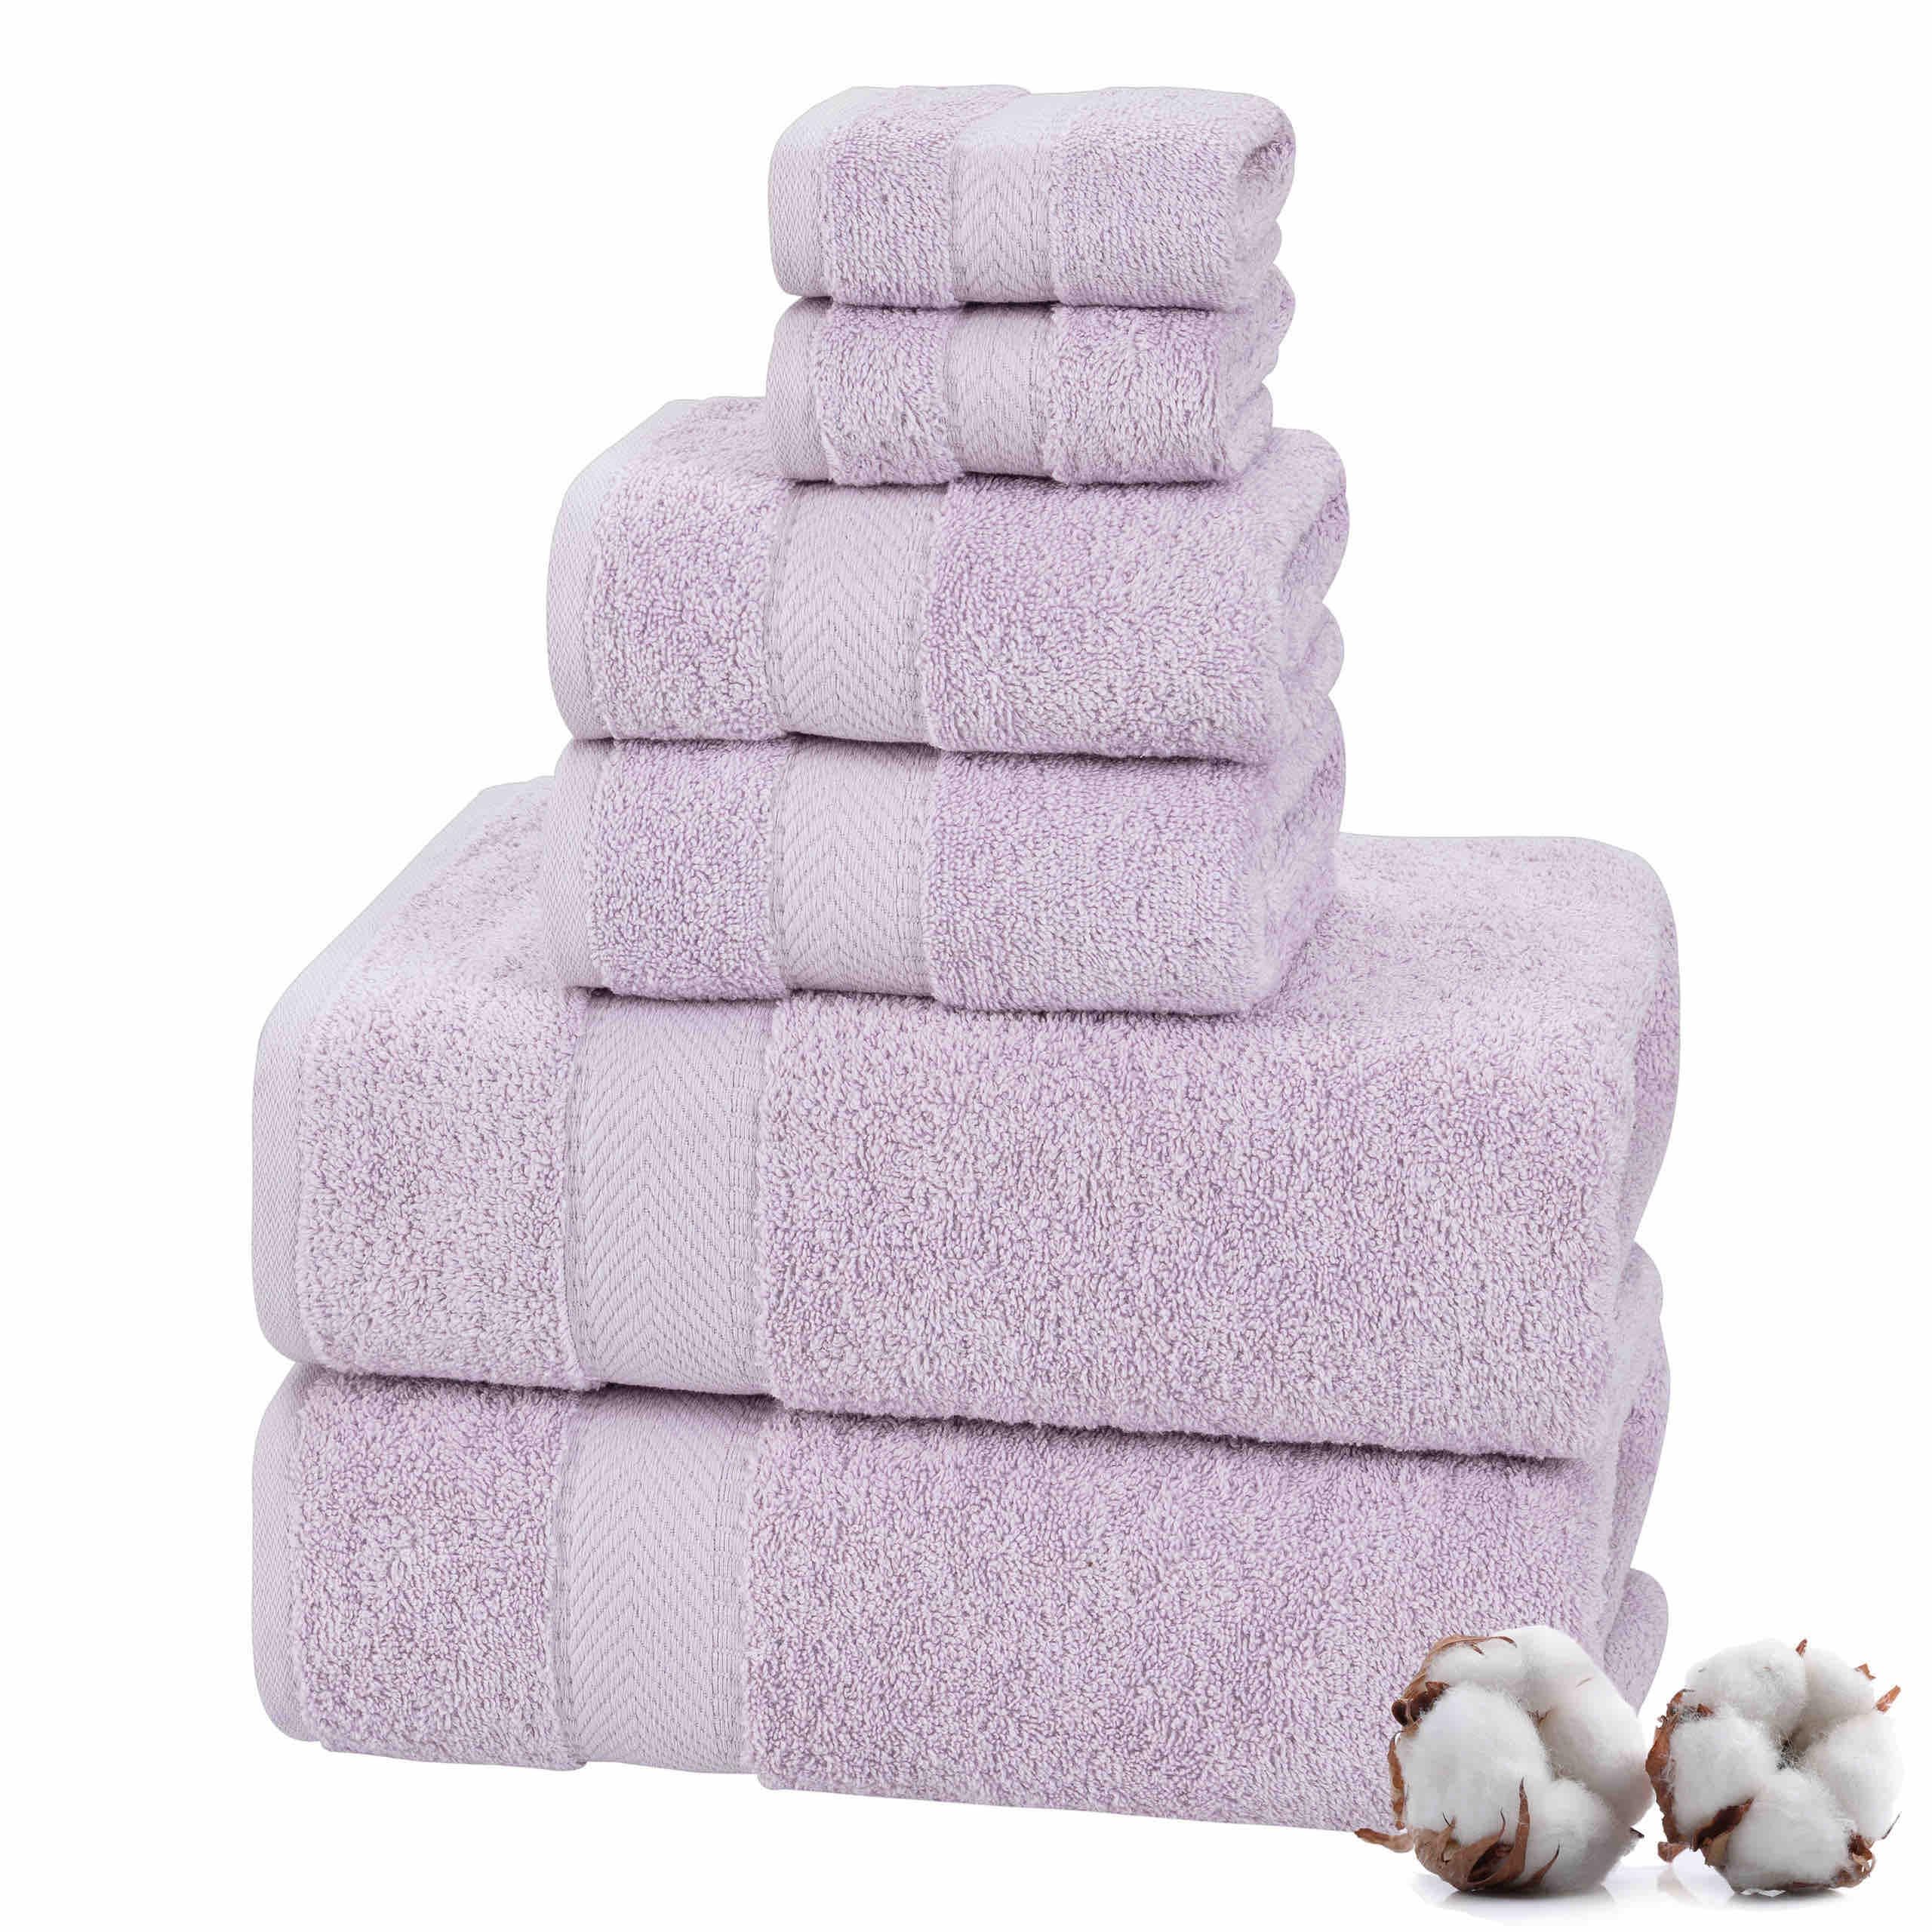 TEXTILOM 100% Turkish Cotton 6 Pcs Bath Towel Set, Luxury Soft & Absorbent Bathroom Towels Set (2 Bath Towels, 2 Hand Towels, 2 Washcloths)- Lilac | Amazon (US)